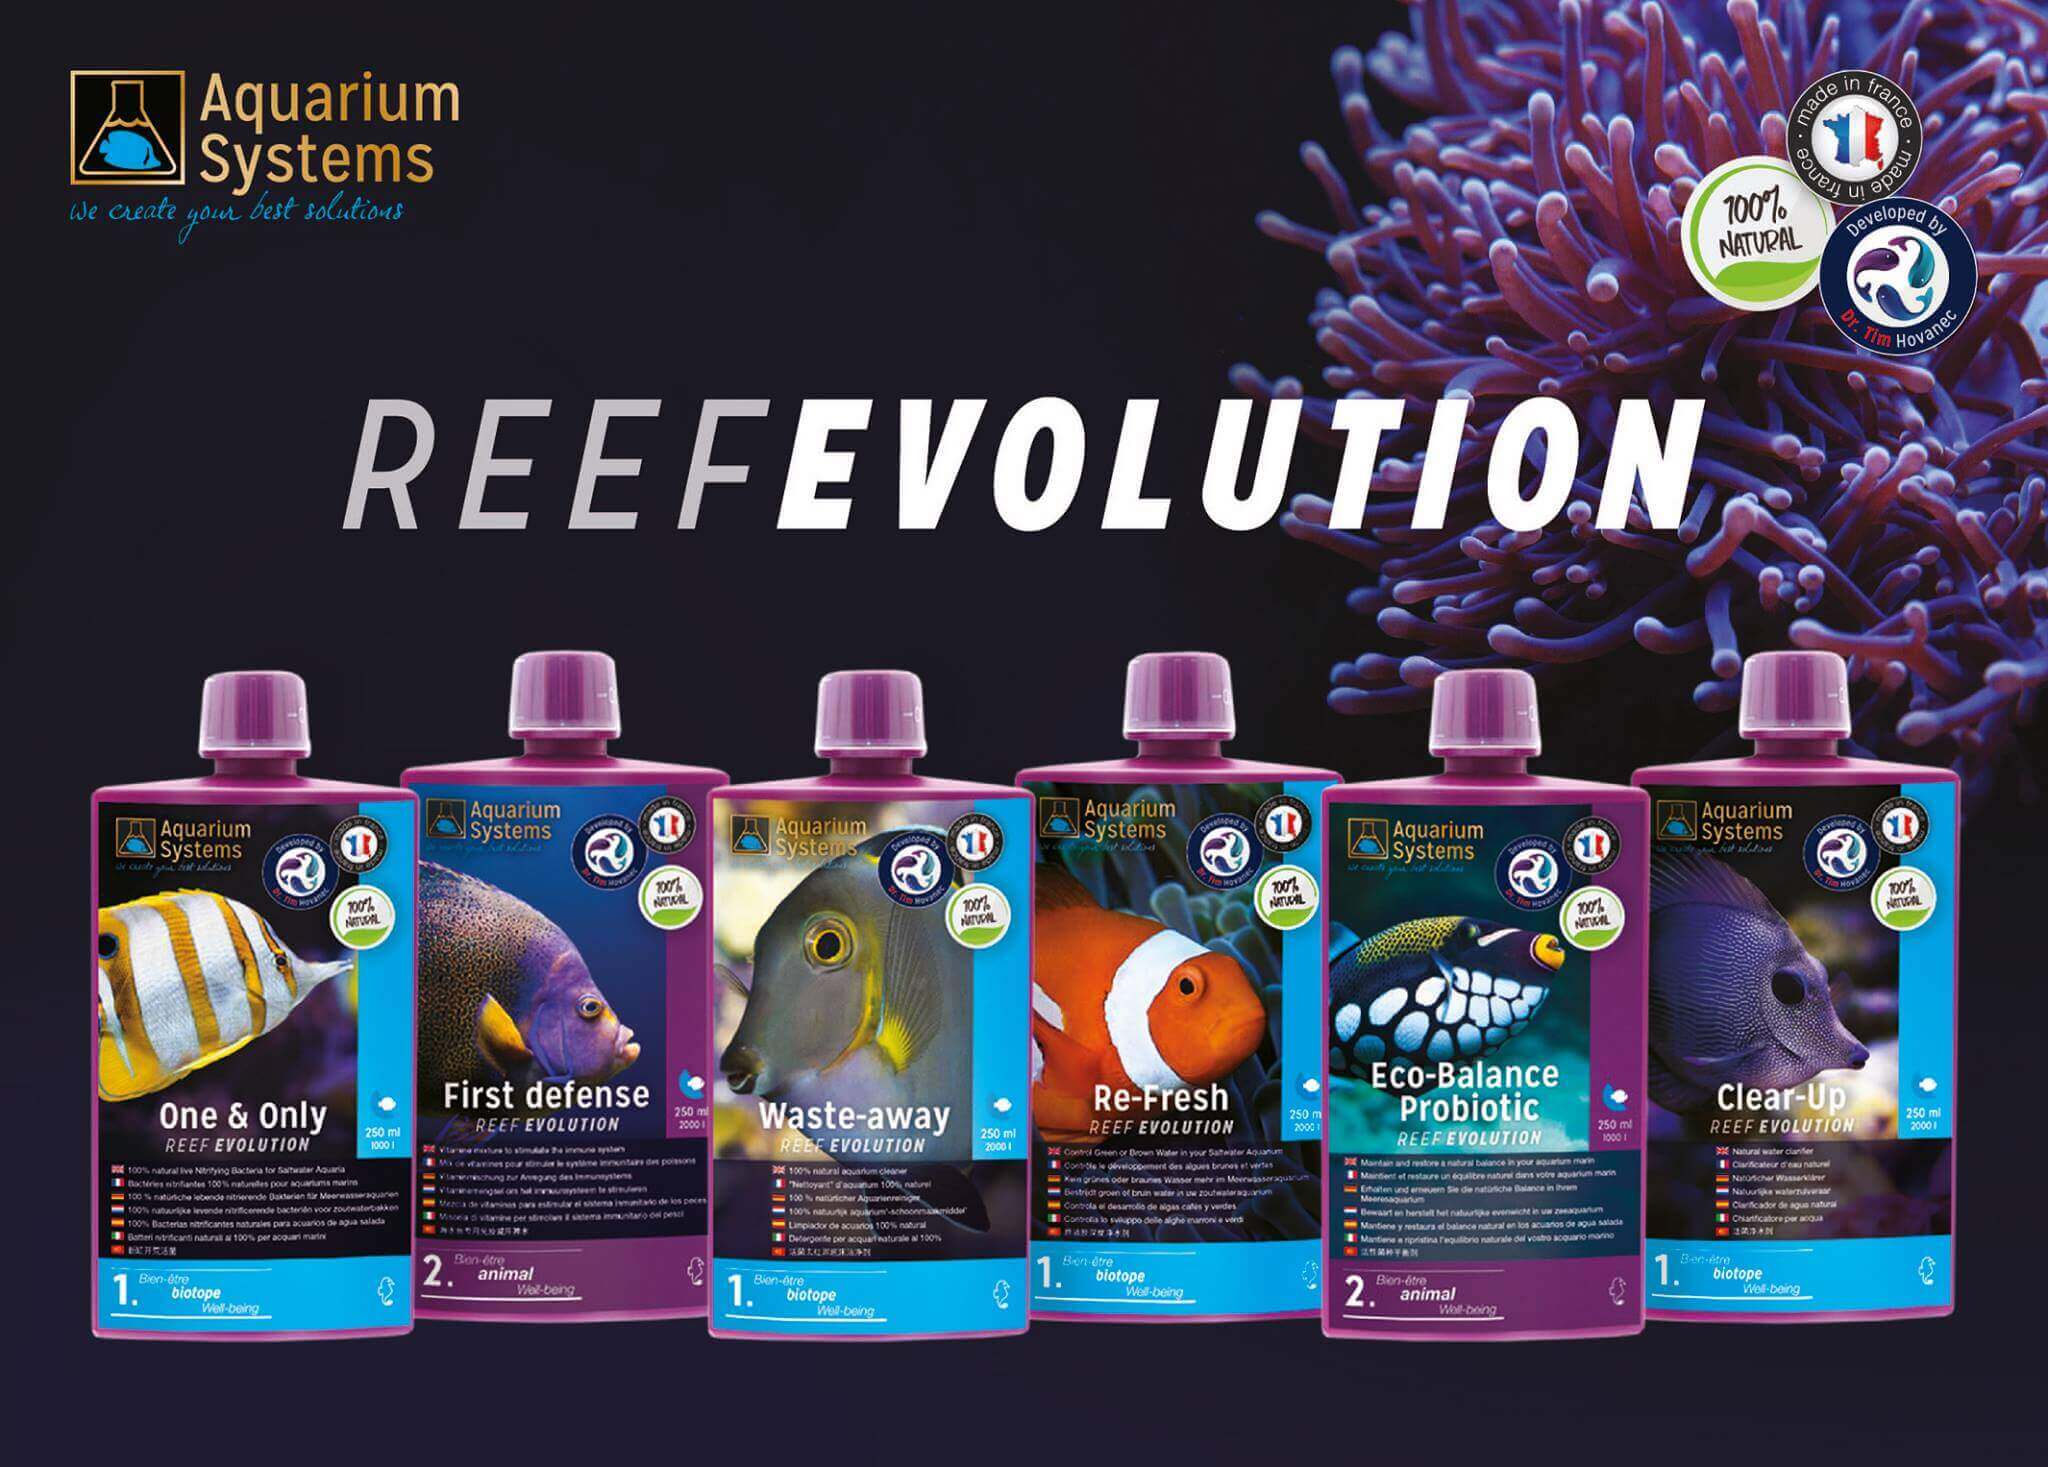 dobavki-dr-tim-aquarium-systems